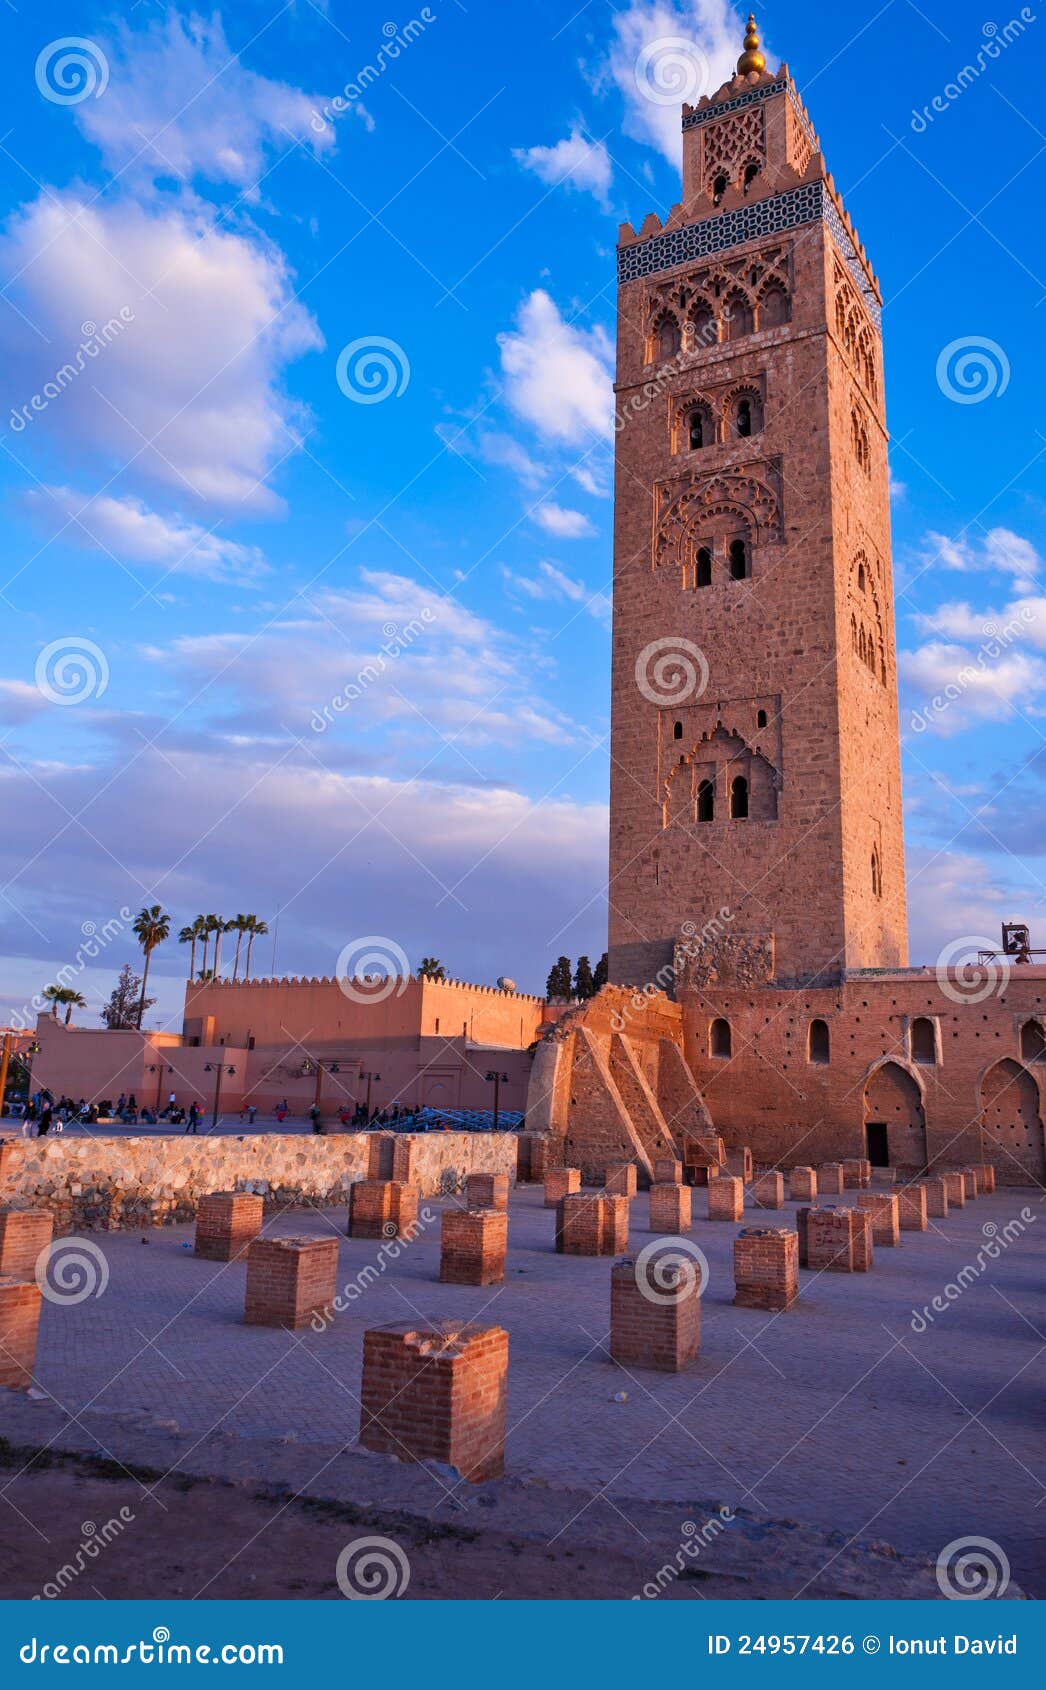 koutoubia mosque in marrakech